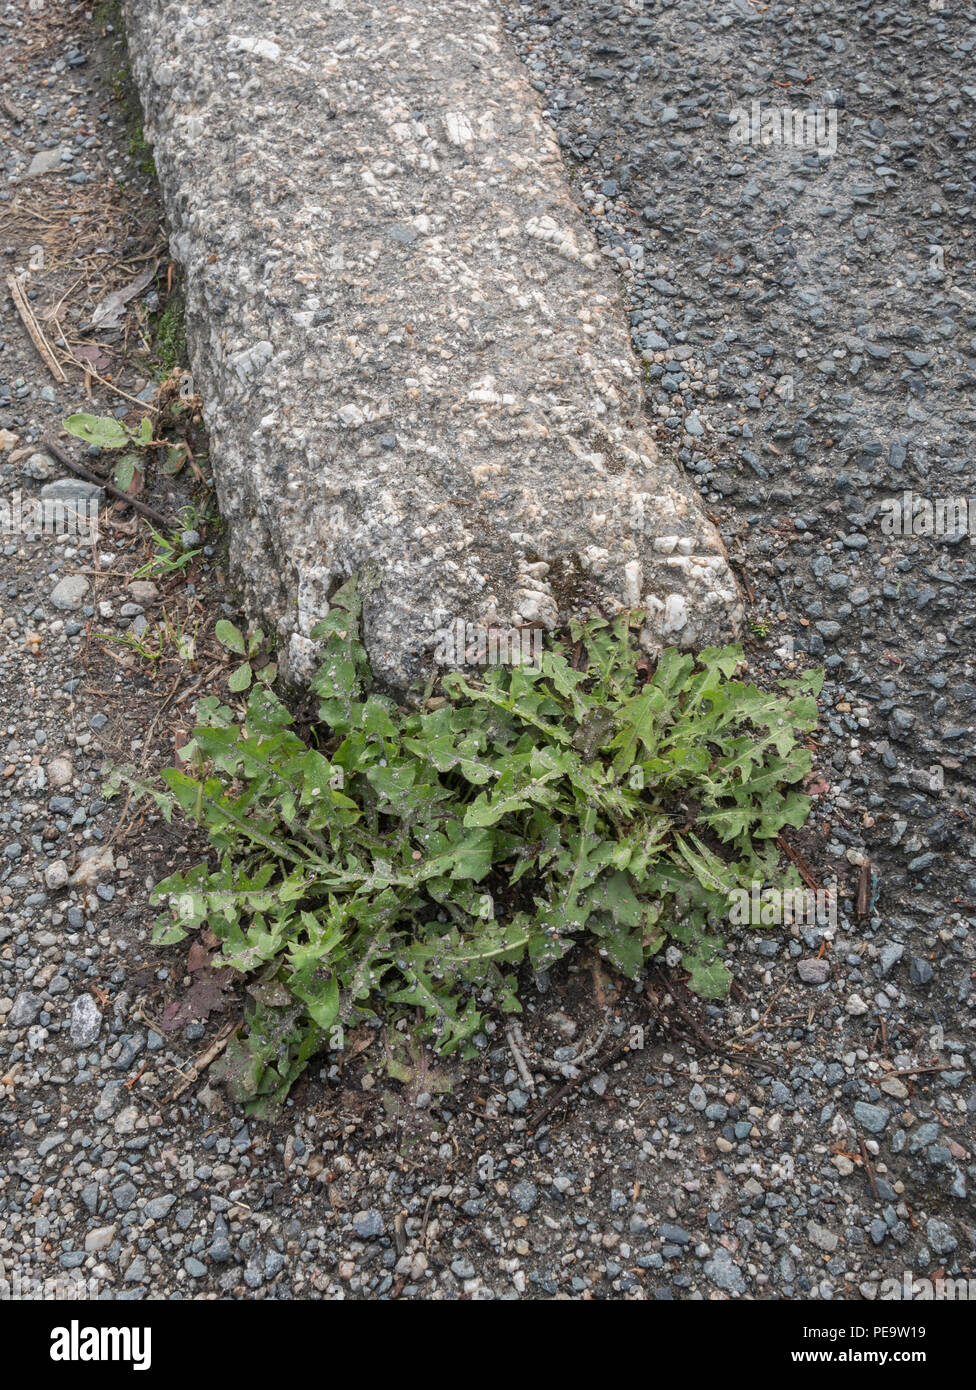 Weeds growing out of kerbside / roadside pavement cracks in urban surroundings. Metaphor weedkiller Roundup / Glyphosate, plants growing in cracks. Stock Photo